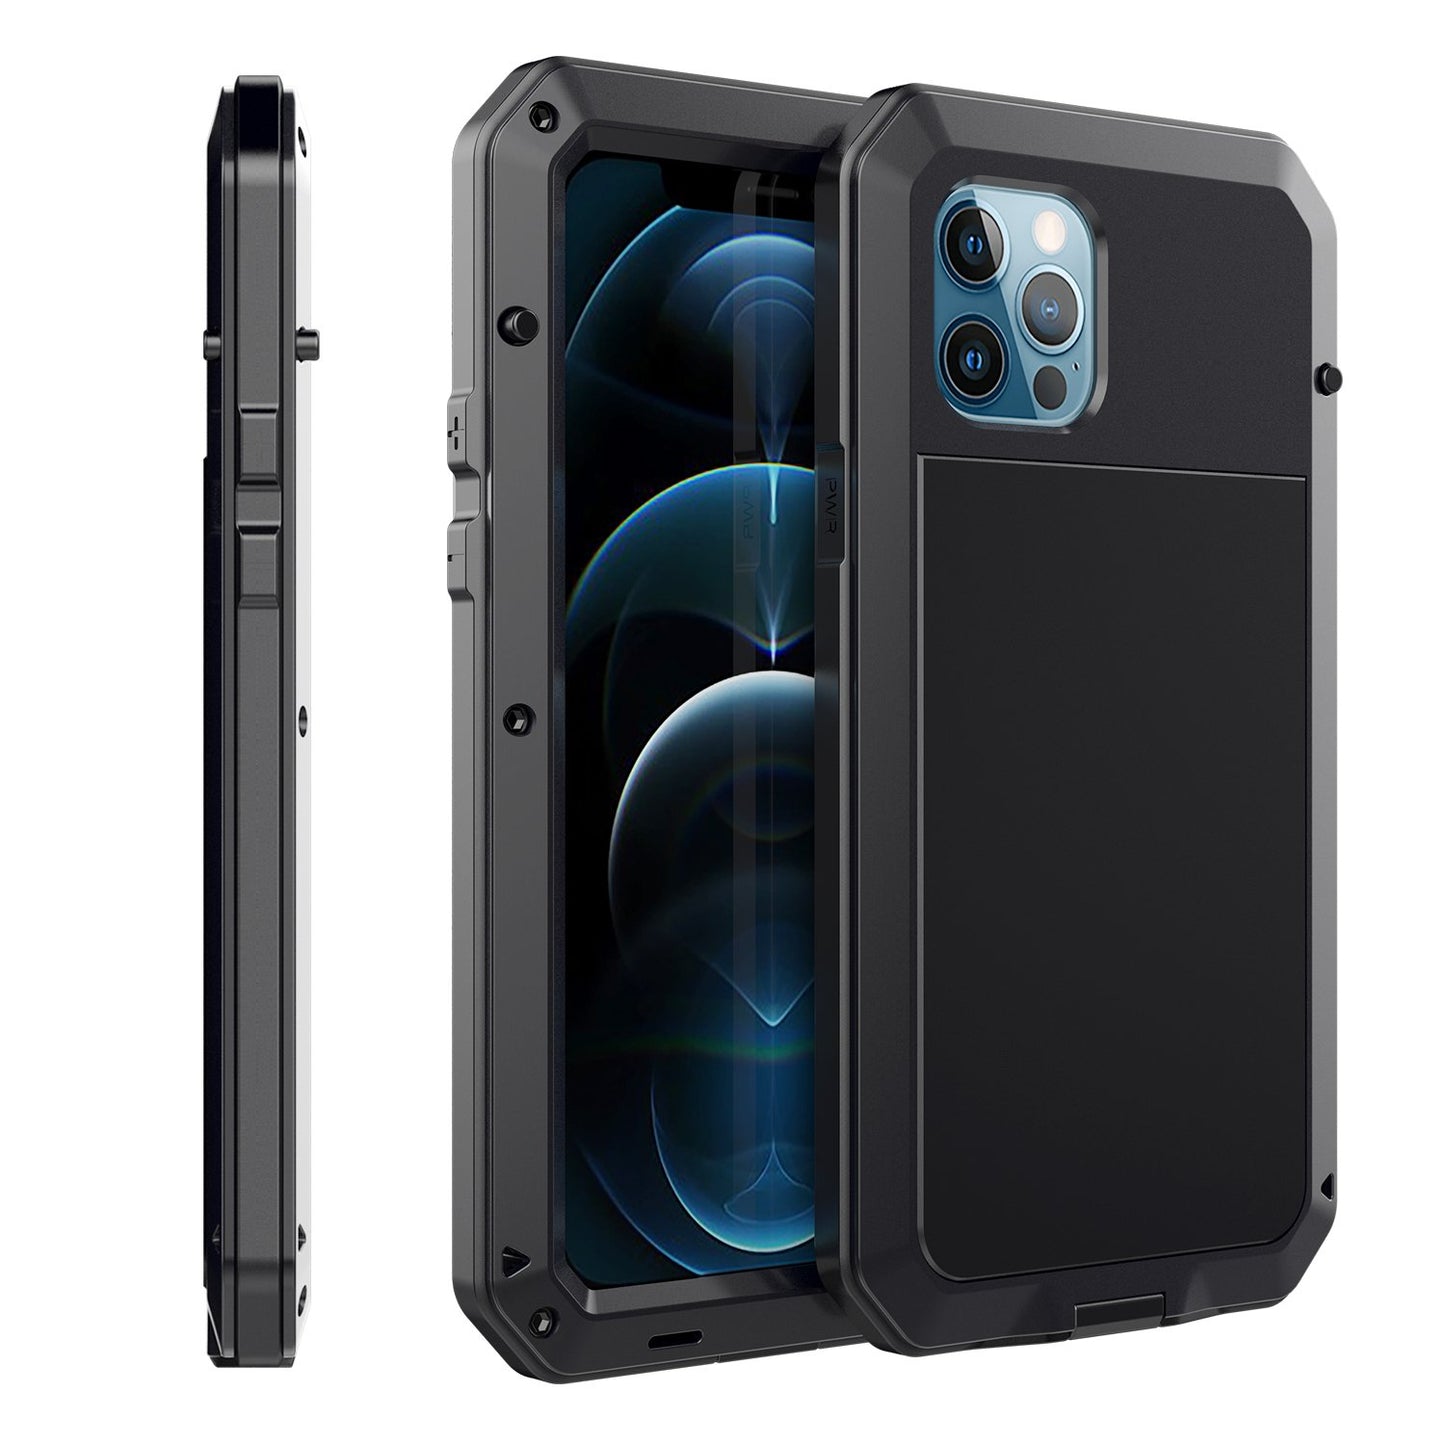 Luxury Doom Armor Case iphone 11 Pro Max Shockproof Dustproof Metal Aluminum Gorilla Glass 360 Full Body Cover Screws